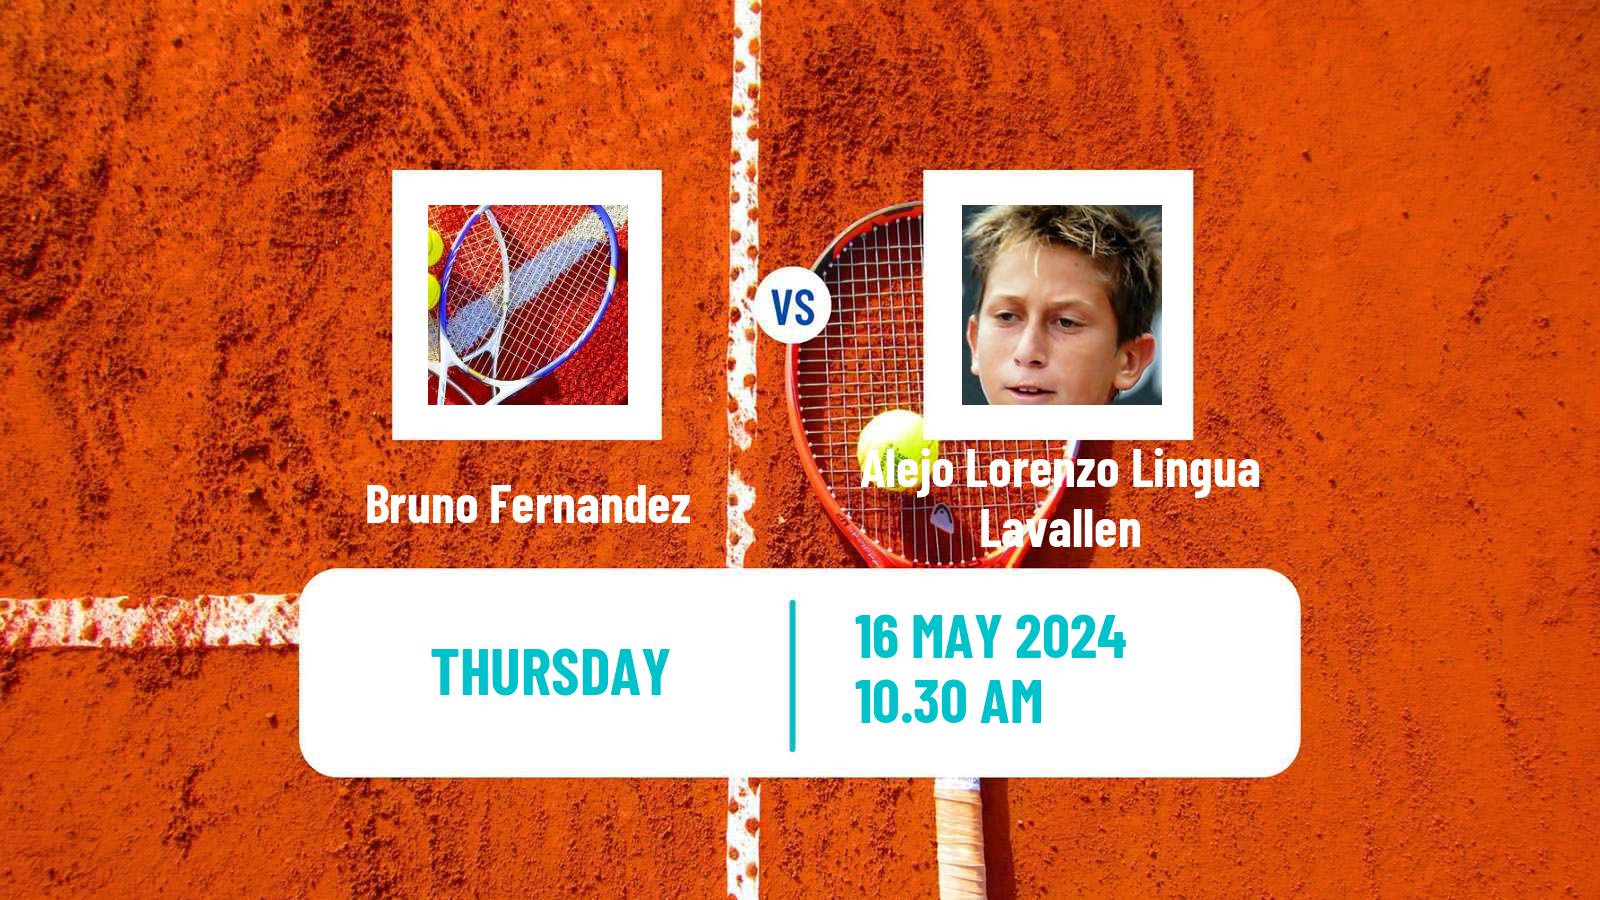 Tennis ITF M15 Neuquen Men Bruno Fernandez - Alejo Lorenzo Lingua Lavallen